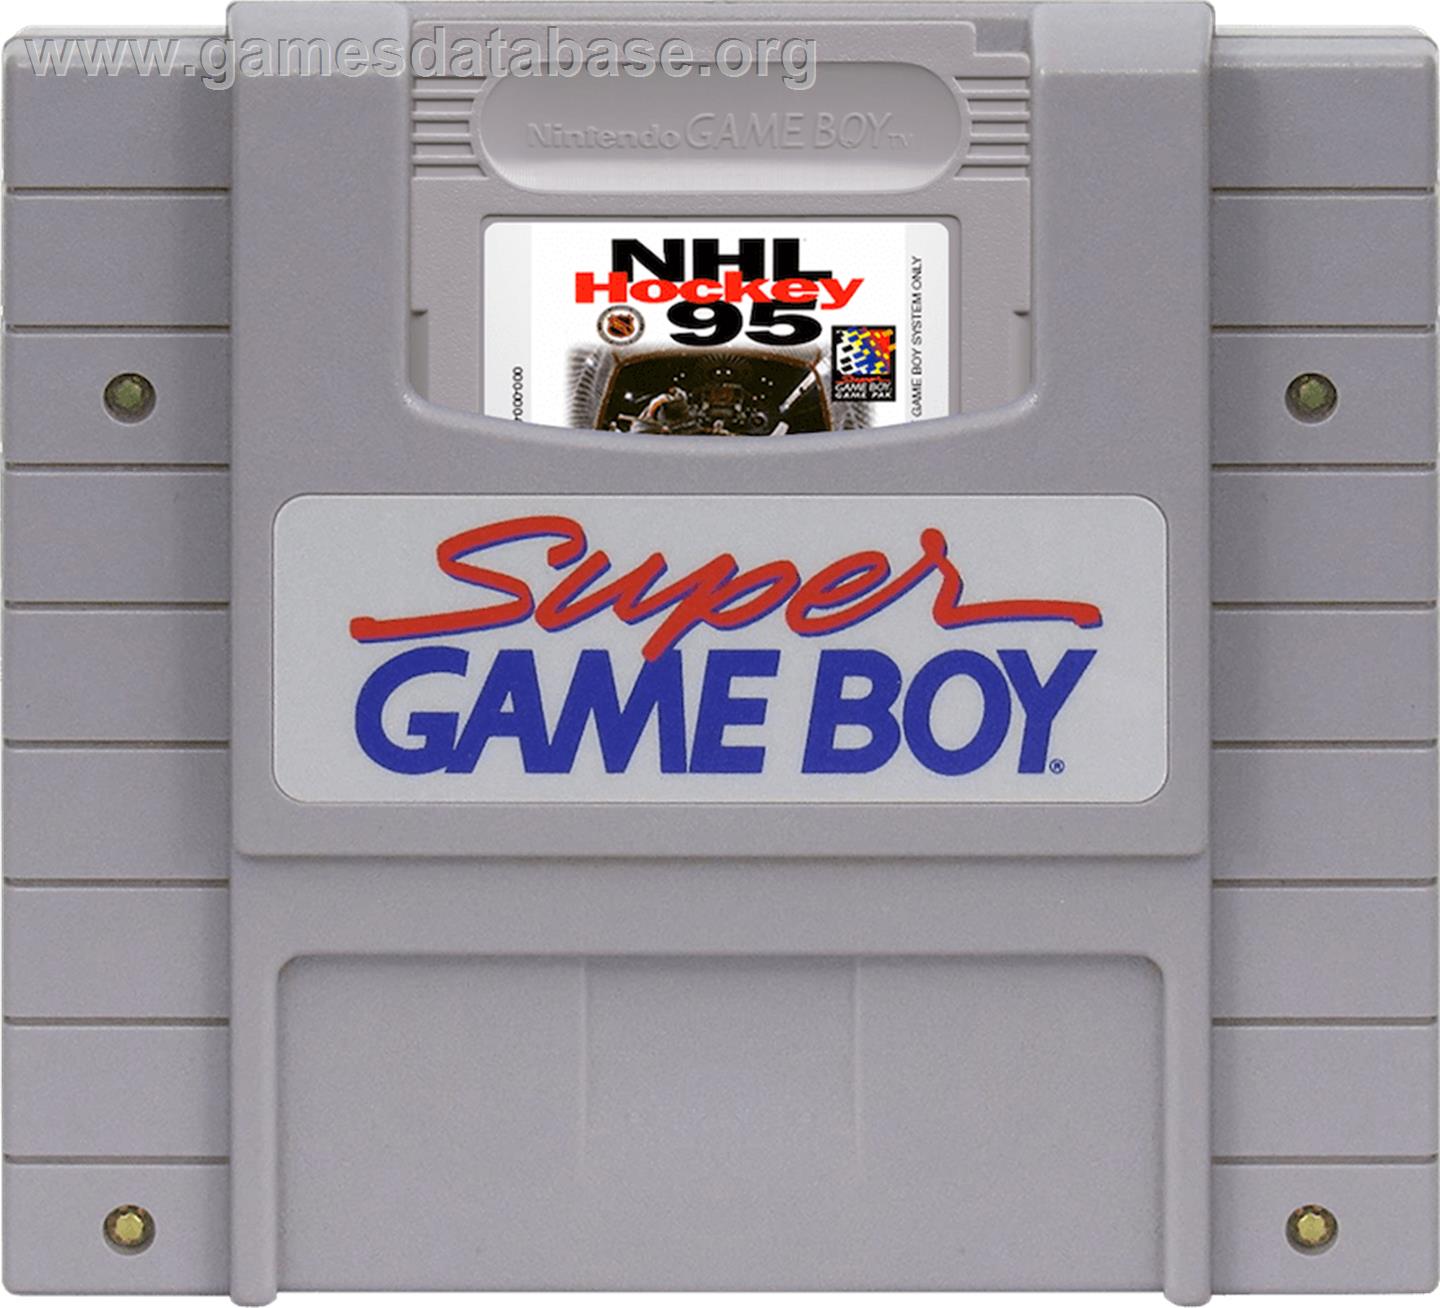 NHL Hockey '95 - Nintendo Super Gameboy - Artwork - Cartridge